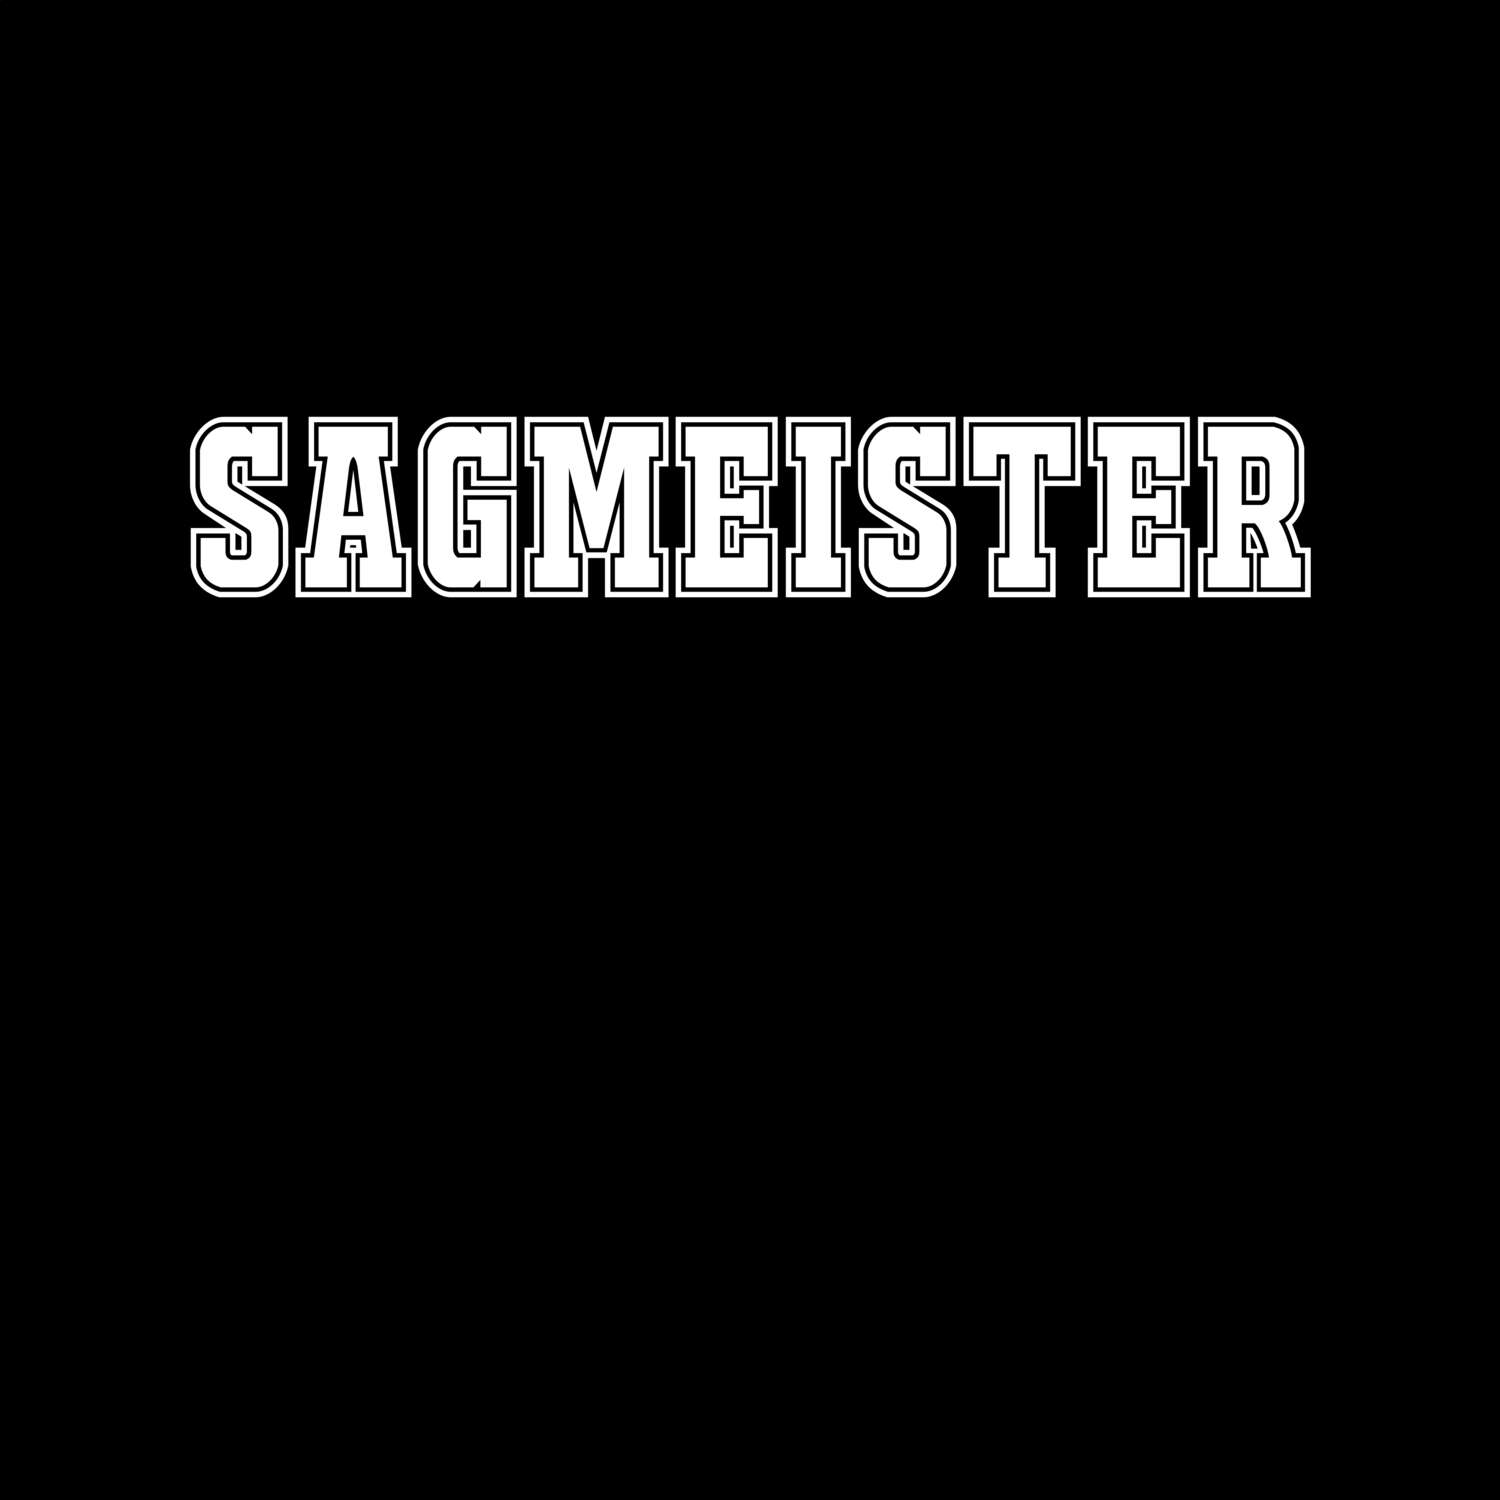 Sagmeister T-Shirt »Classic«